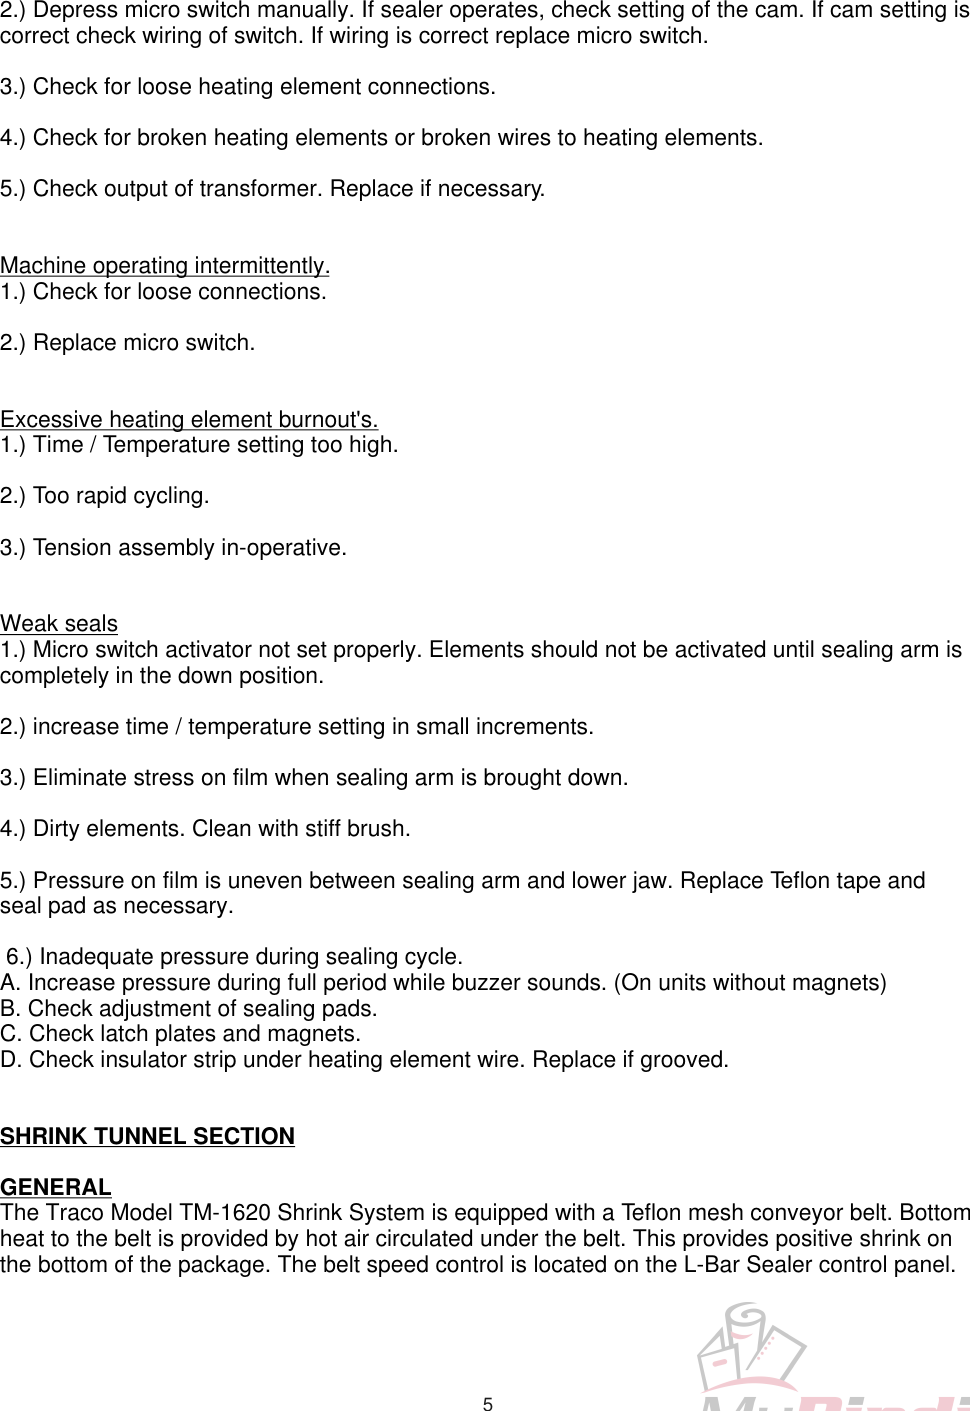 Page 7 of 10 - MyBinding Traco-Tm1620-Manual User Manual